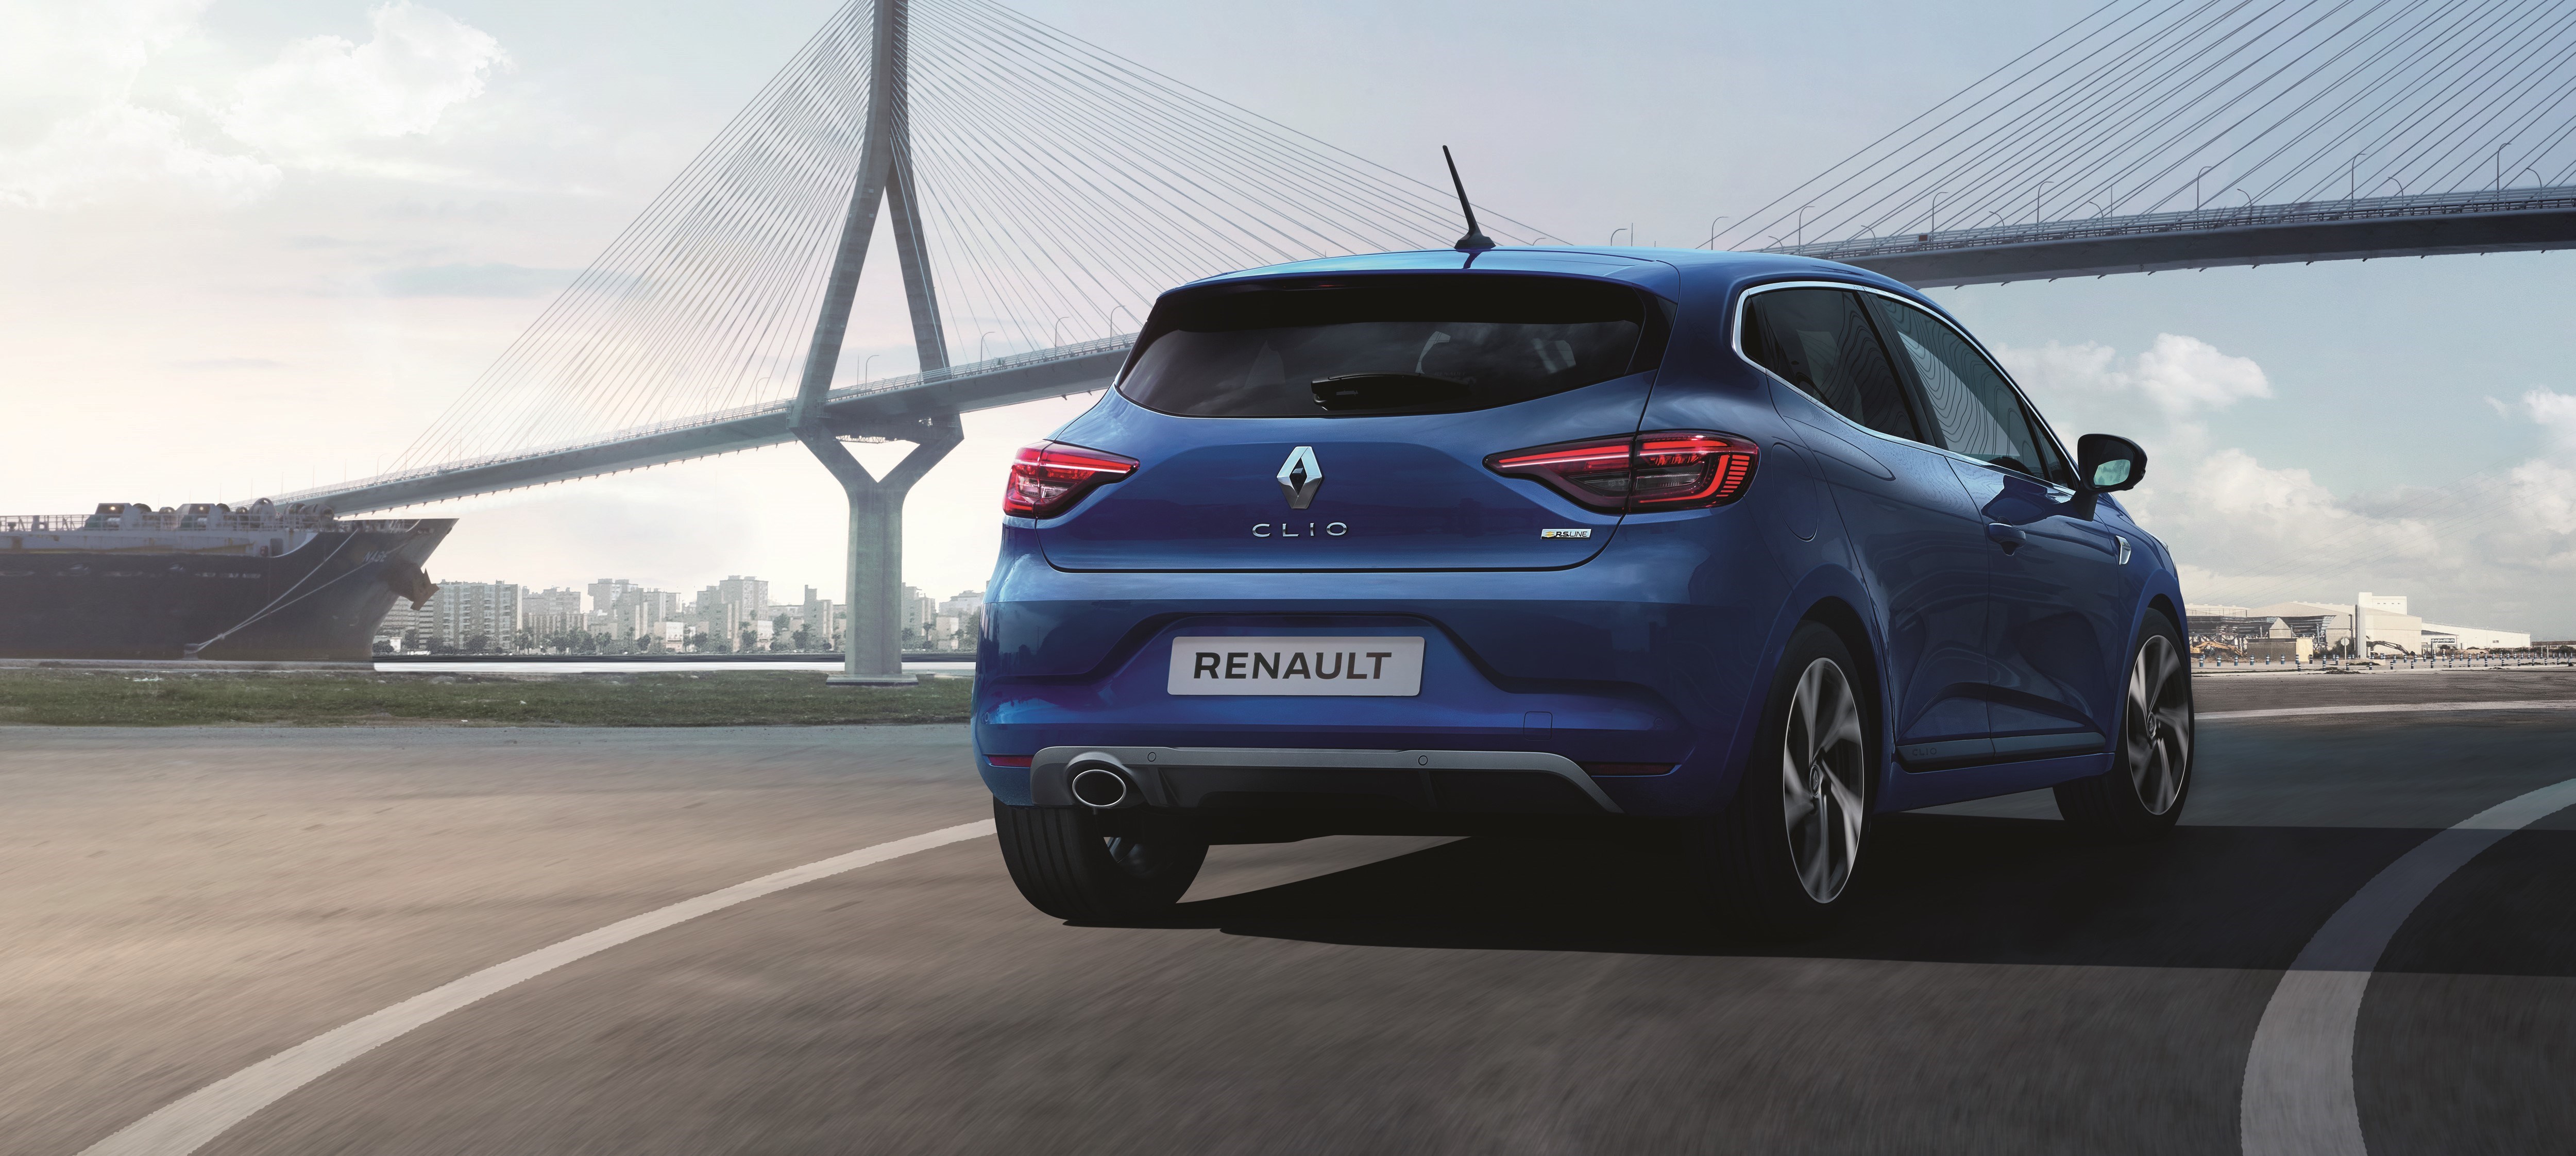 Renault Clio exterior specifications